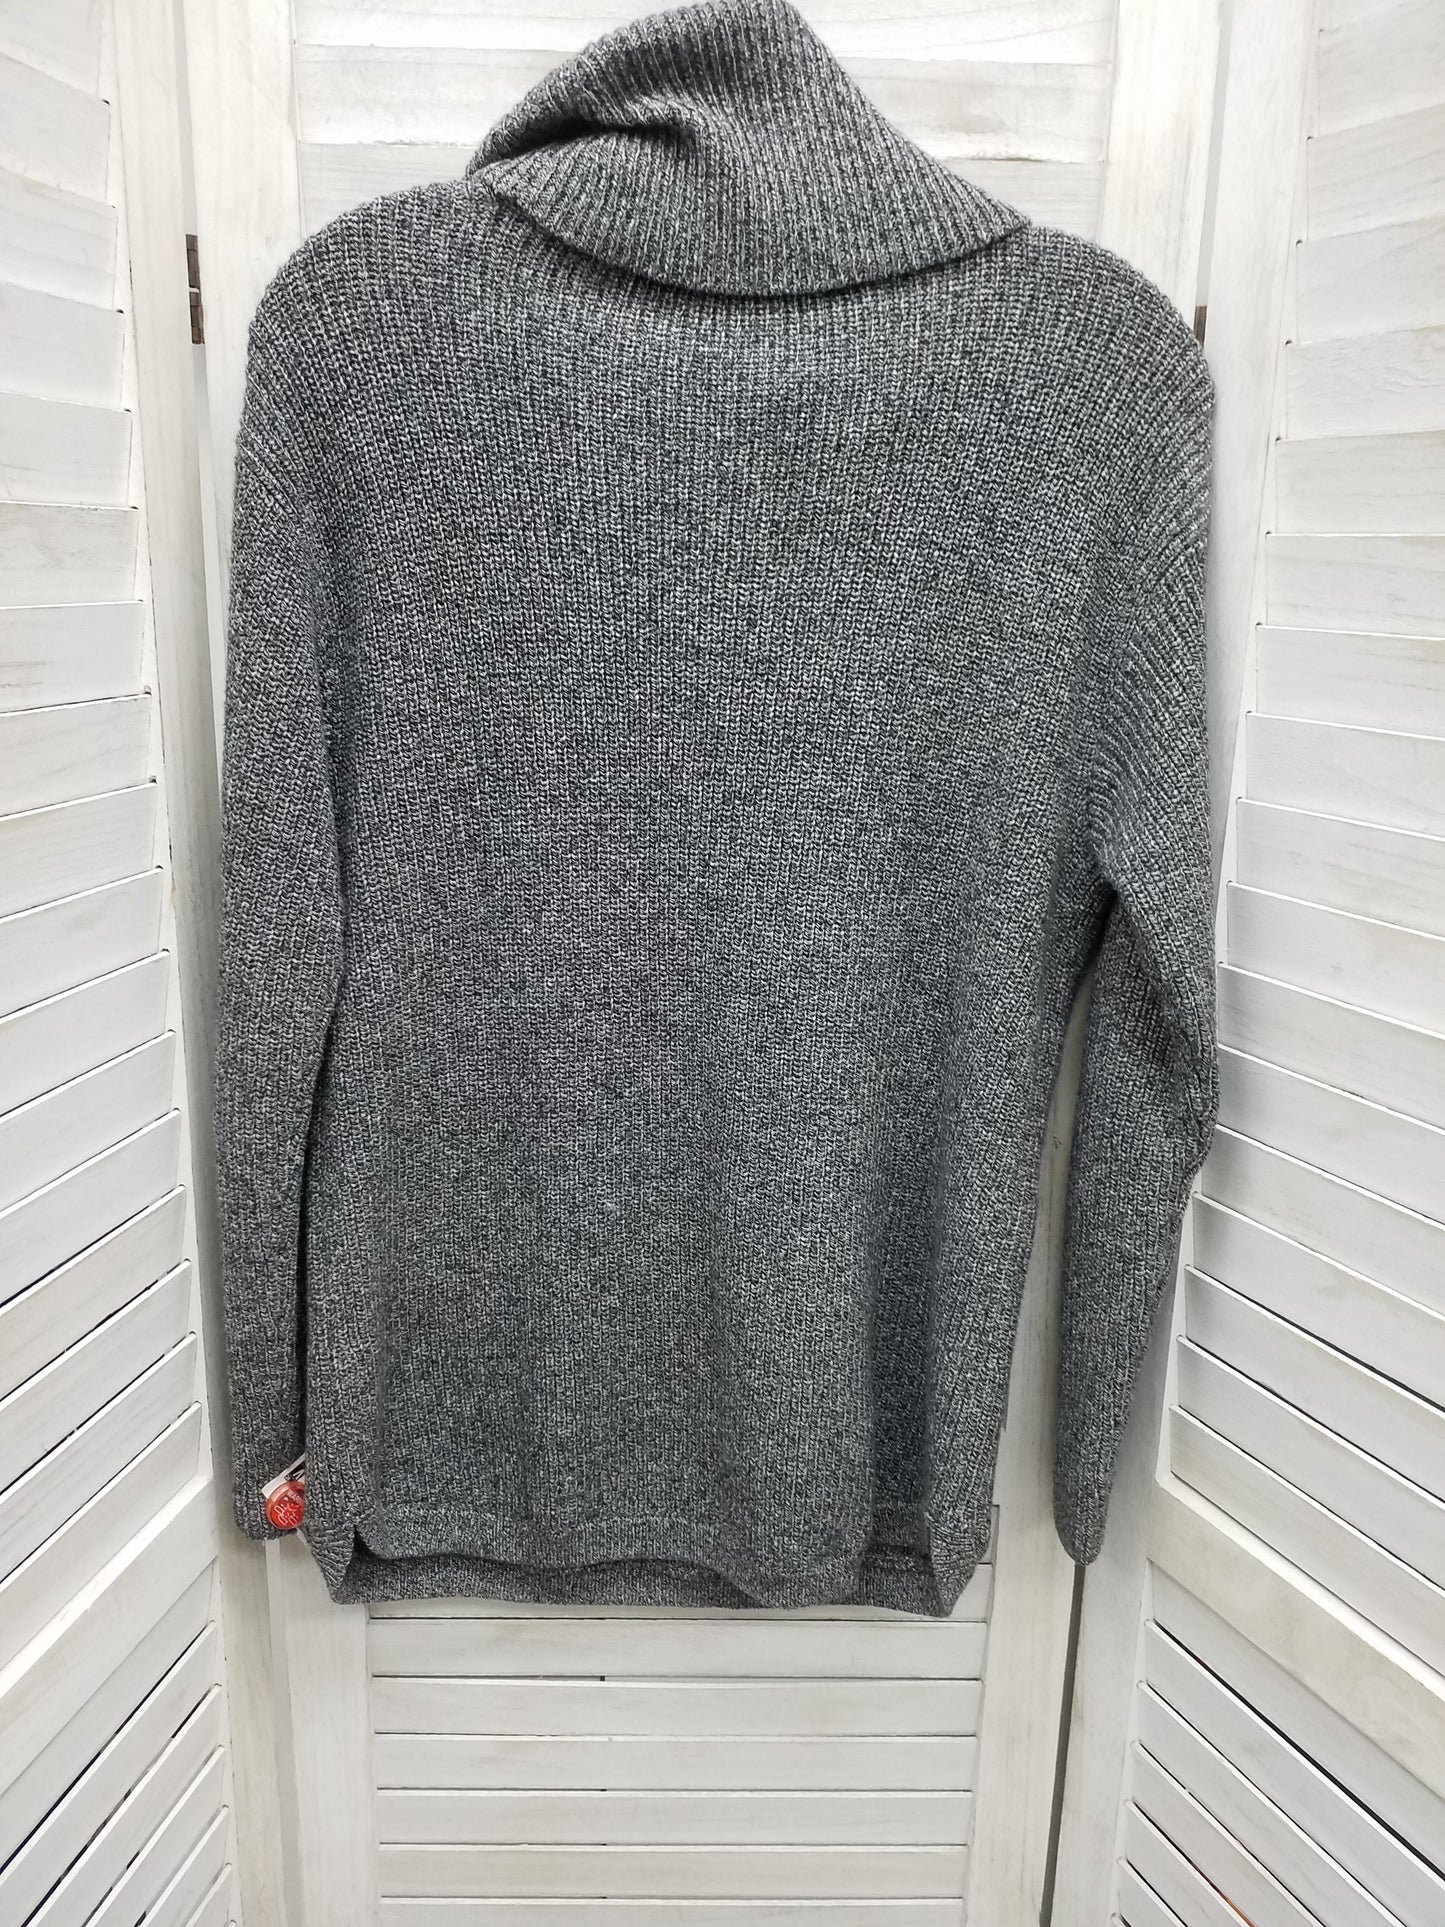 Sweater By Talbots  Size: Petite  Medium